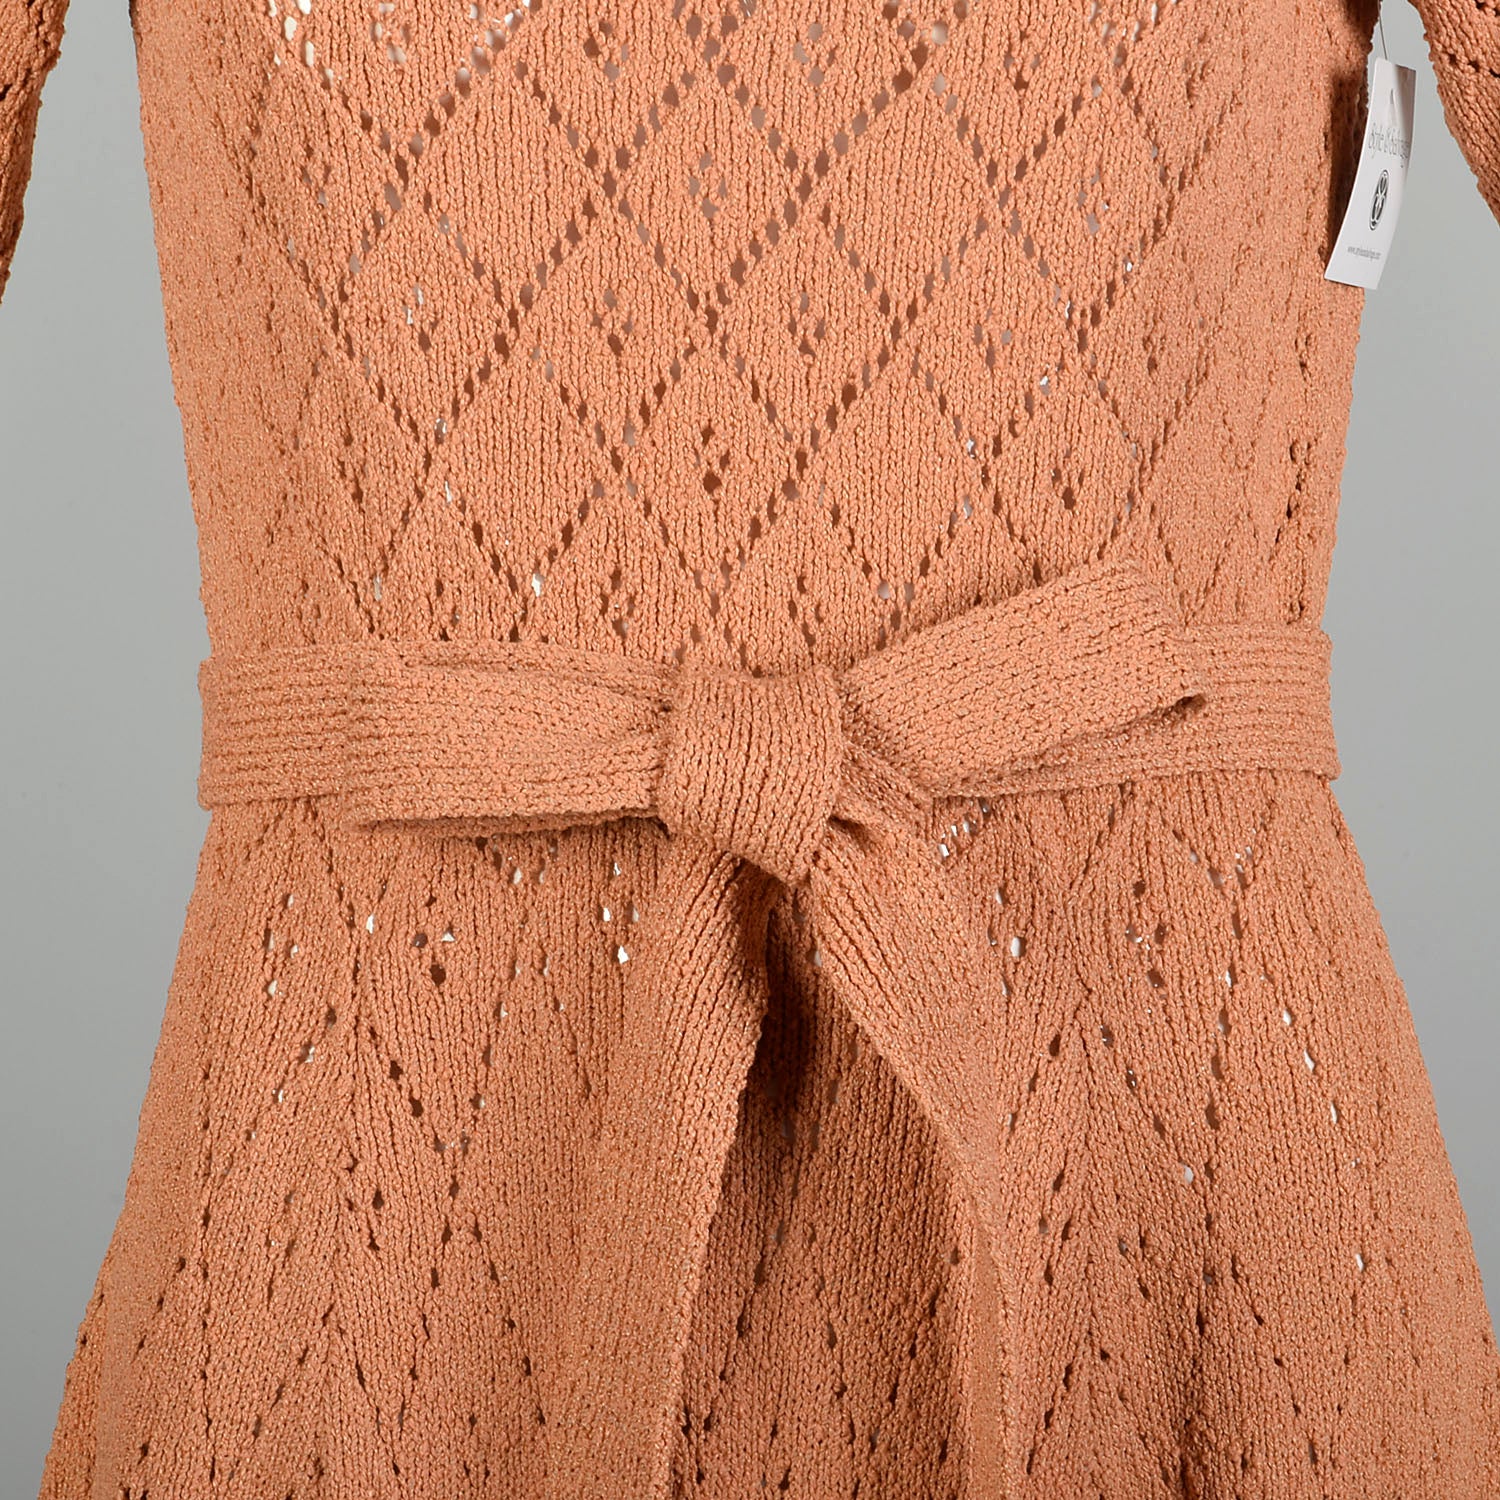 Medium 1970s Long Sleeve Peach  Knit Dress Scalloped Hem Ruffled Collar Cuffs